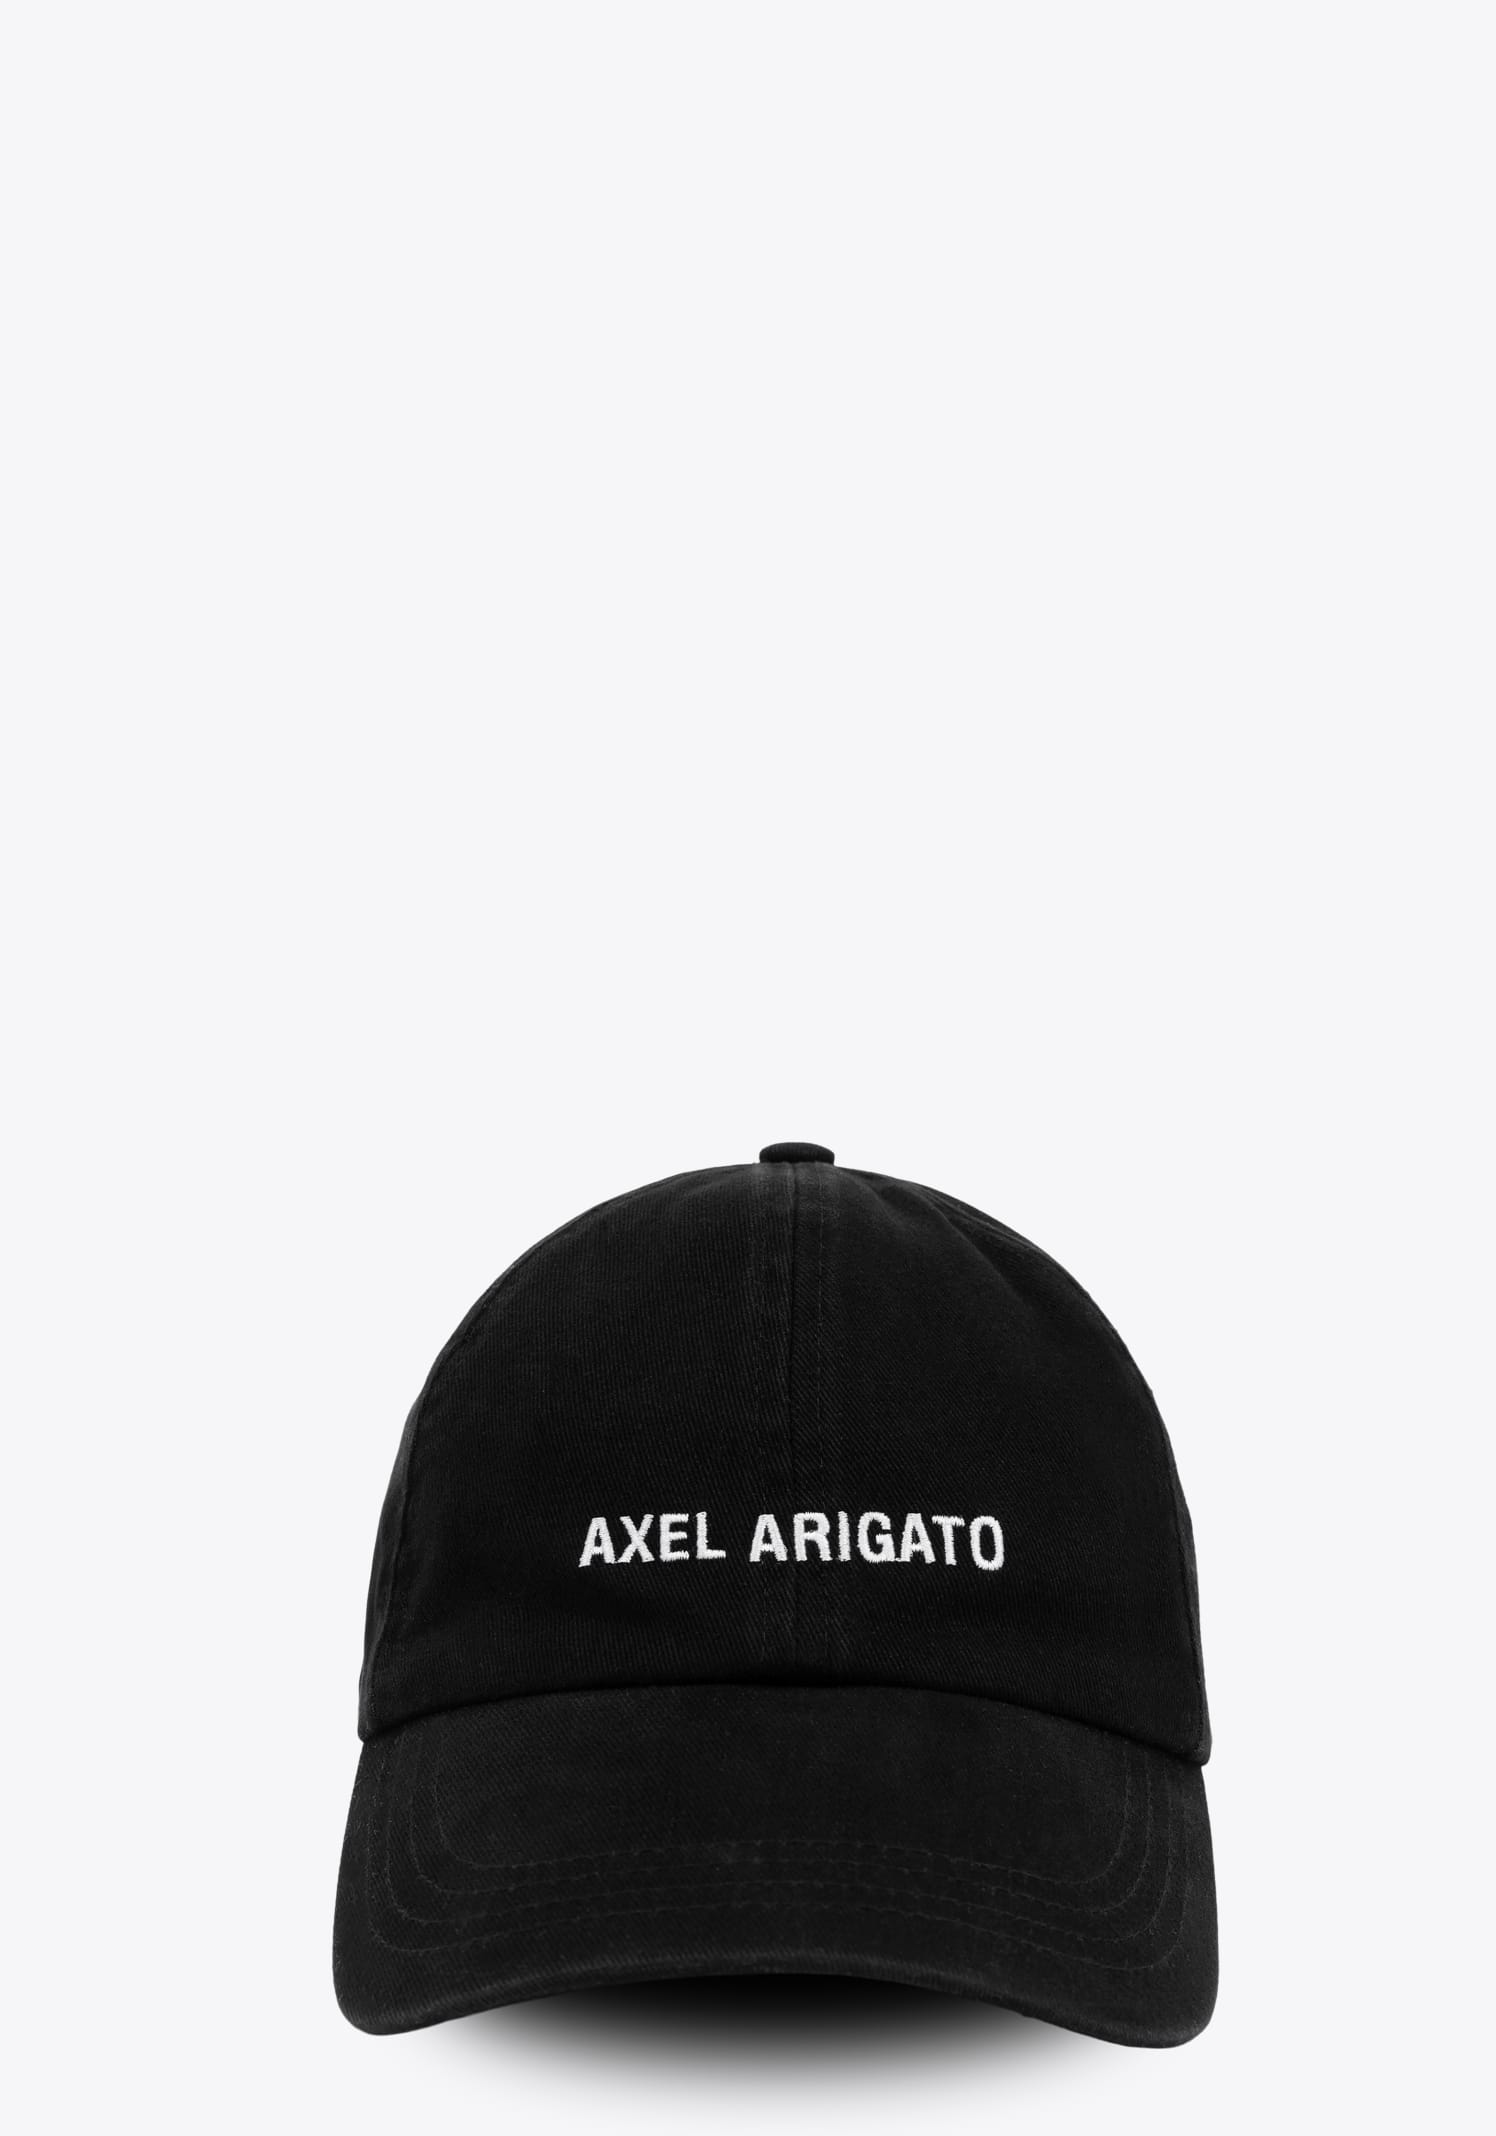 Axel Arigato Logo Cap Black cap with emrboidered logo